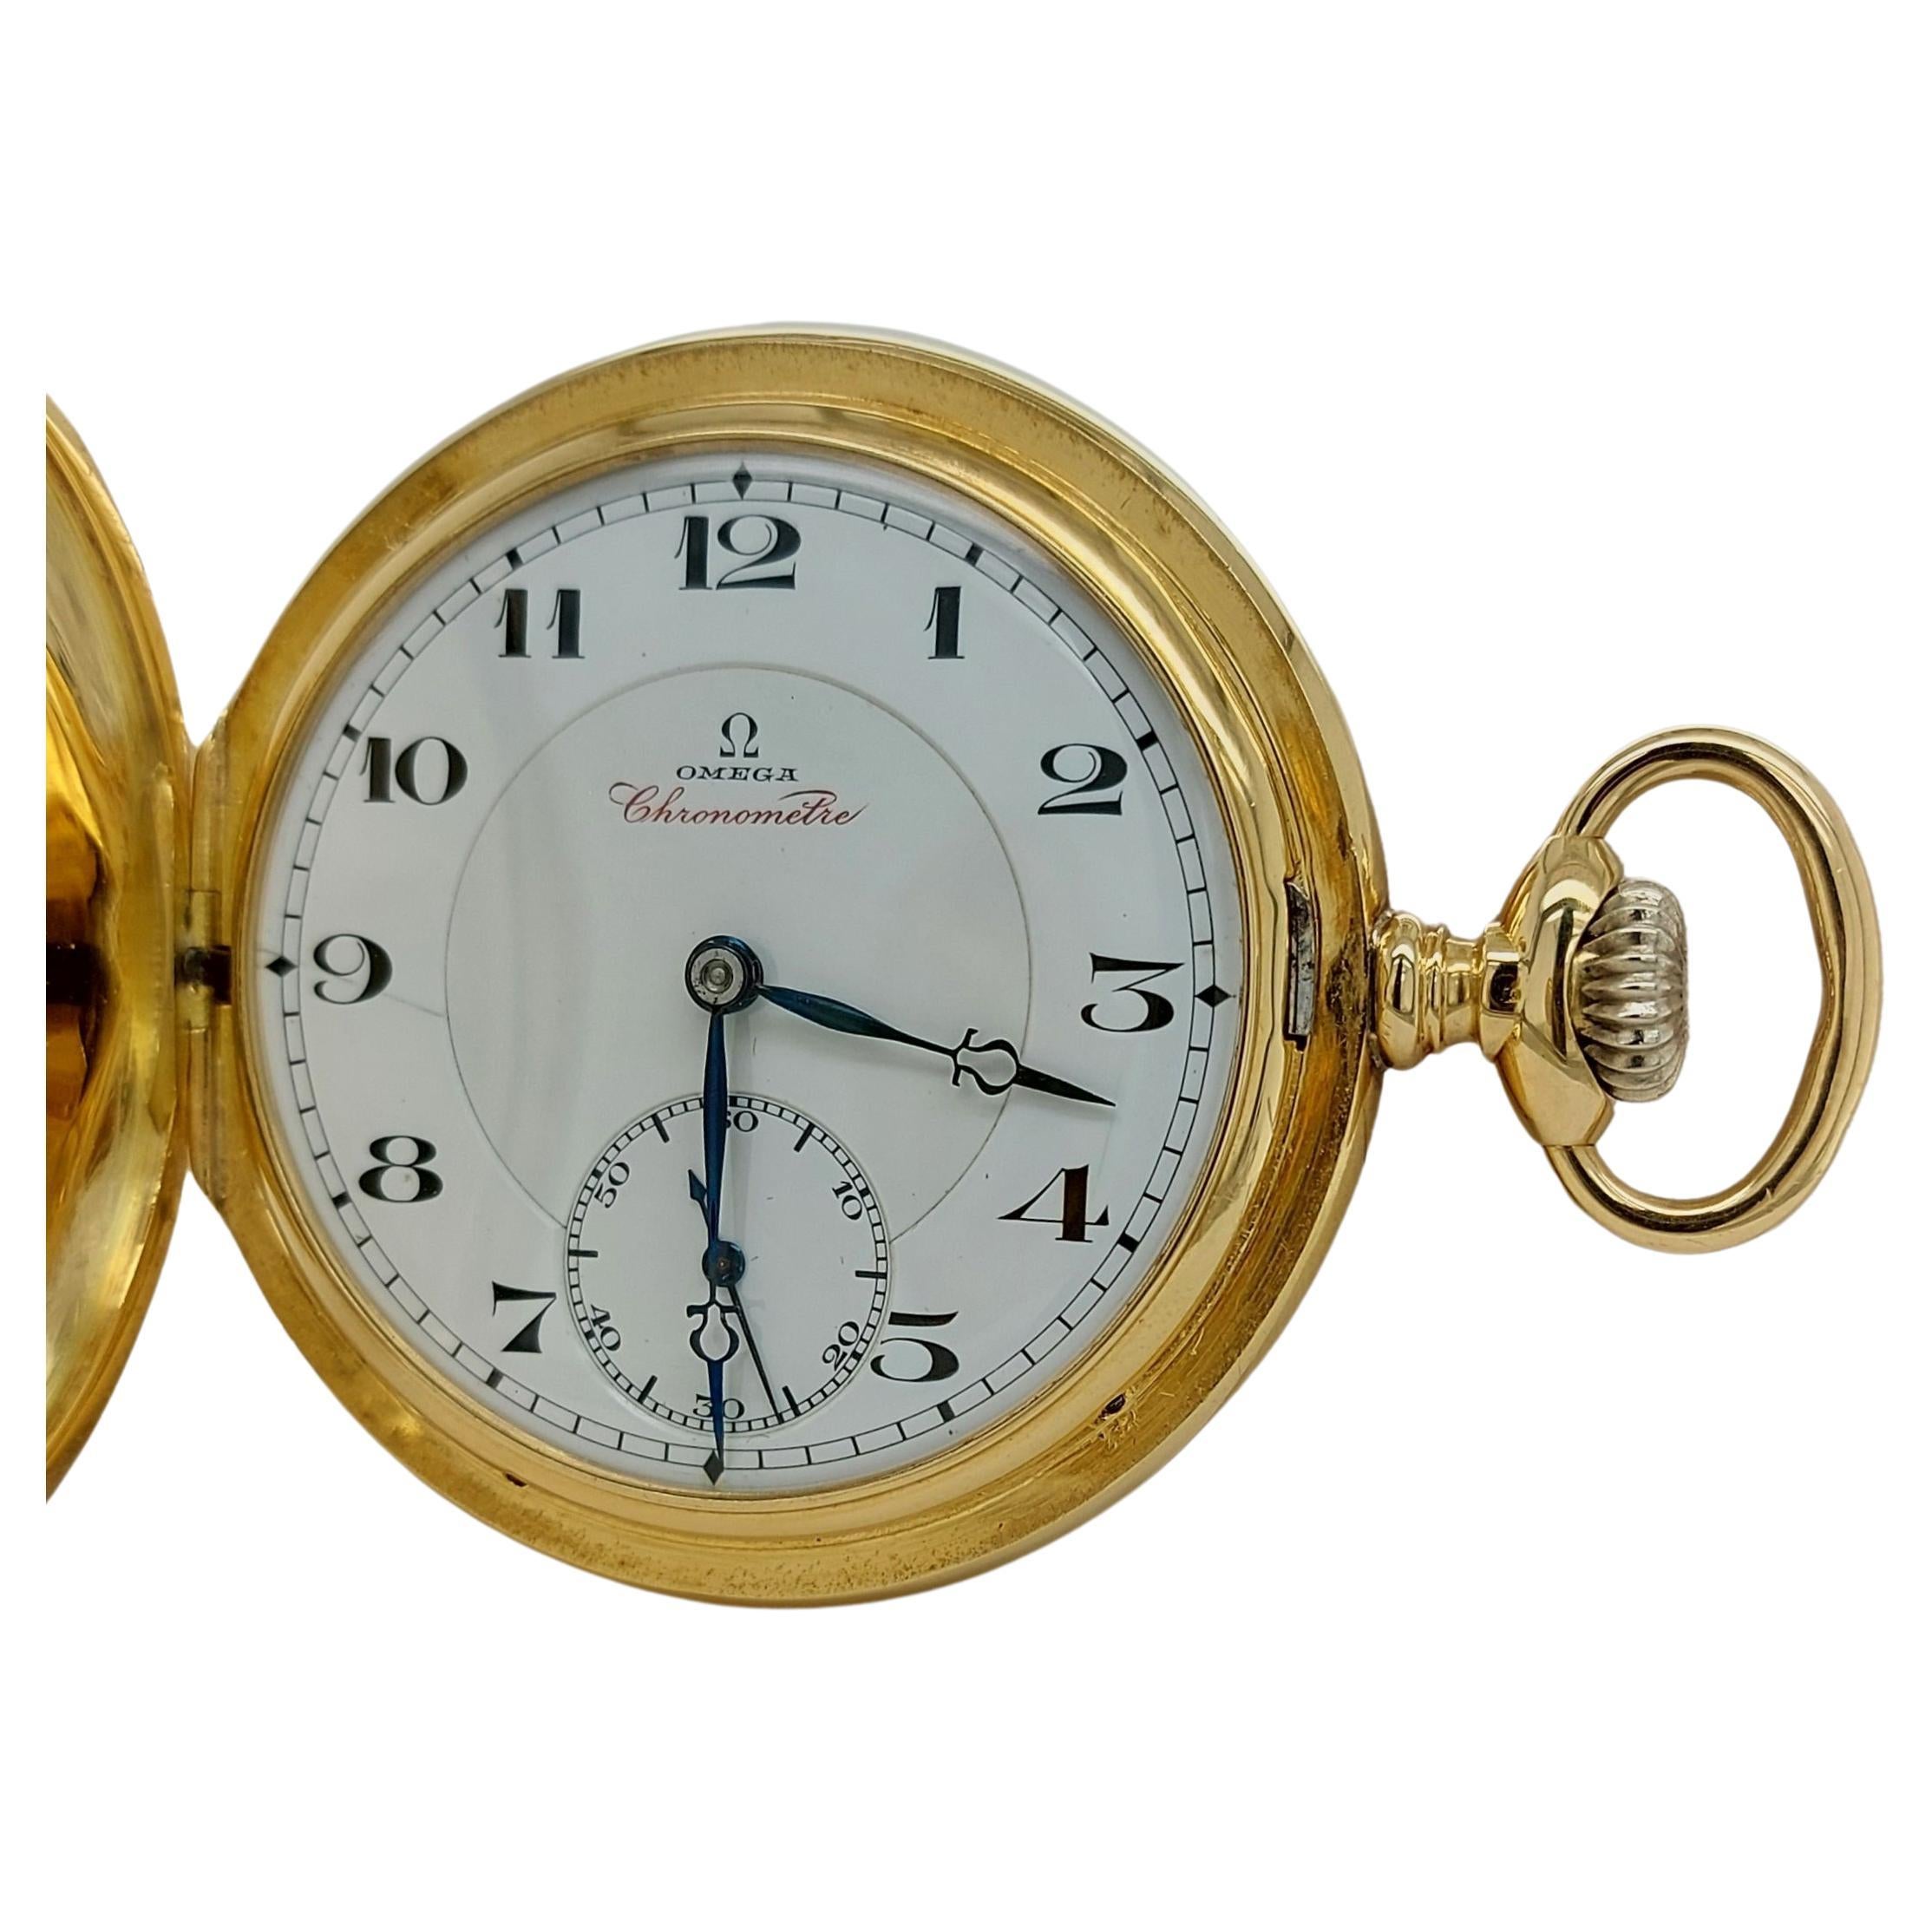 Rare Limited 18kt Gold Omega Chronometre Savonette Pocket Watch, Grade Very Best For Sale